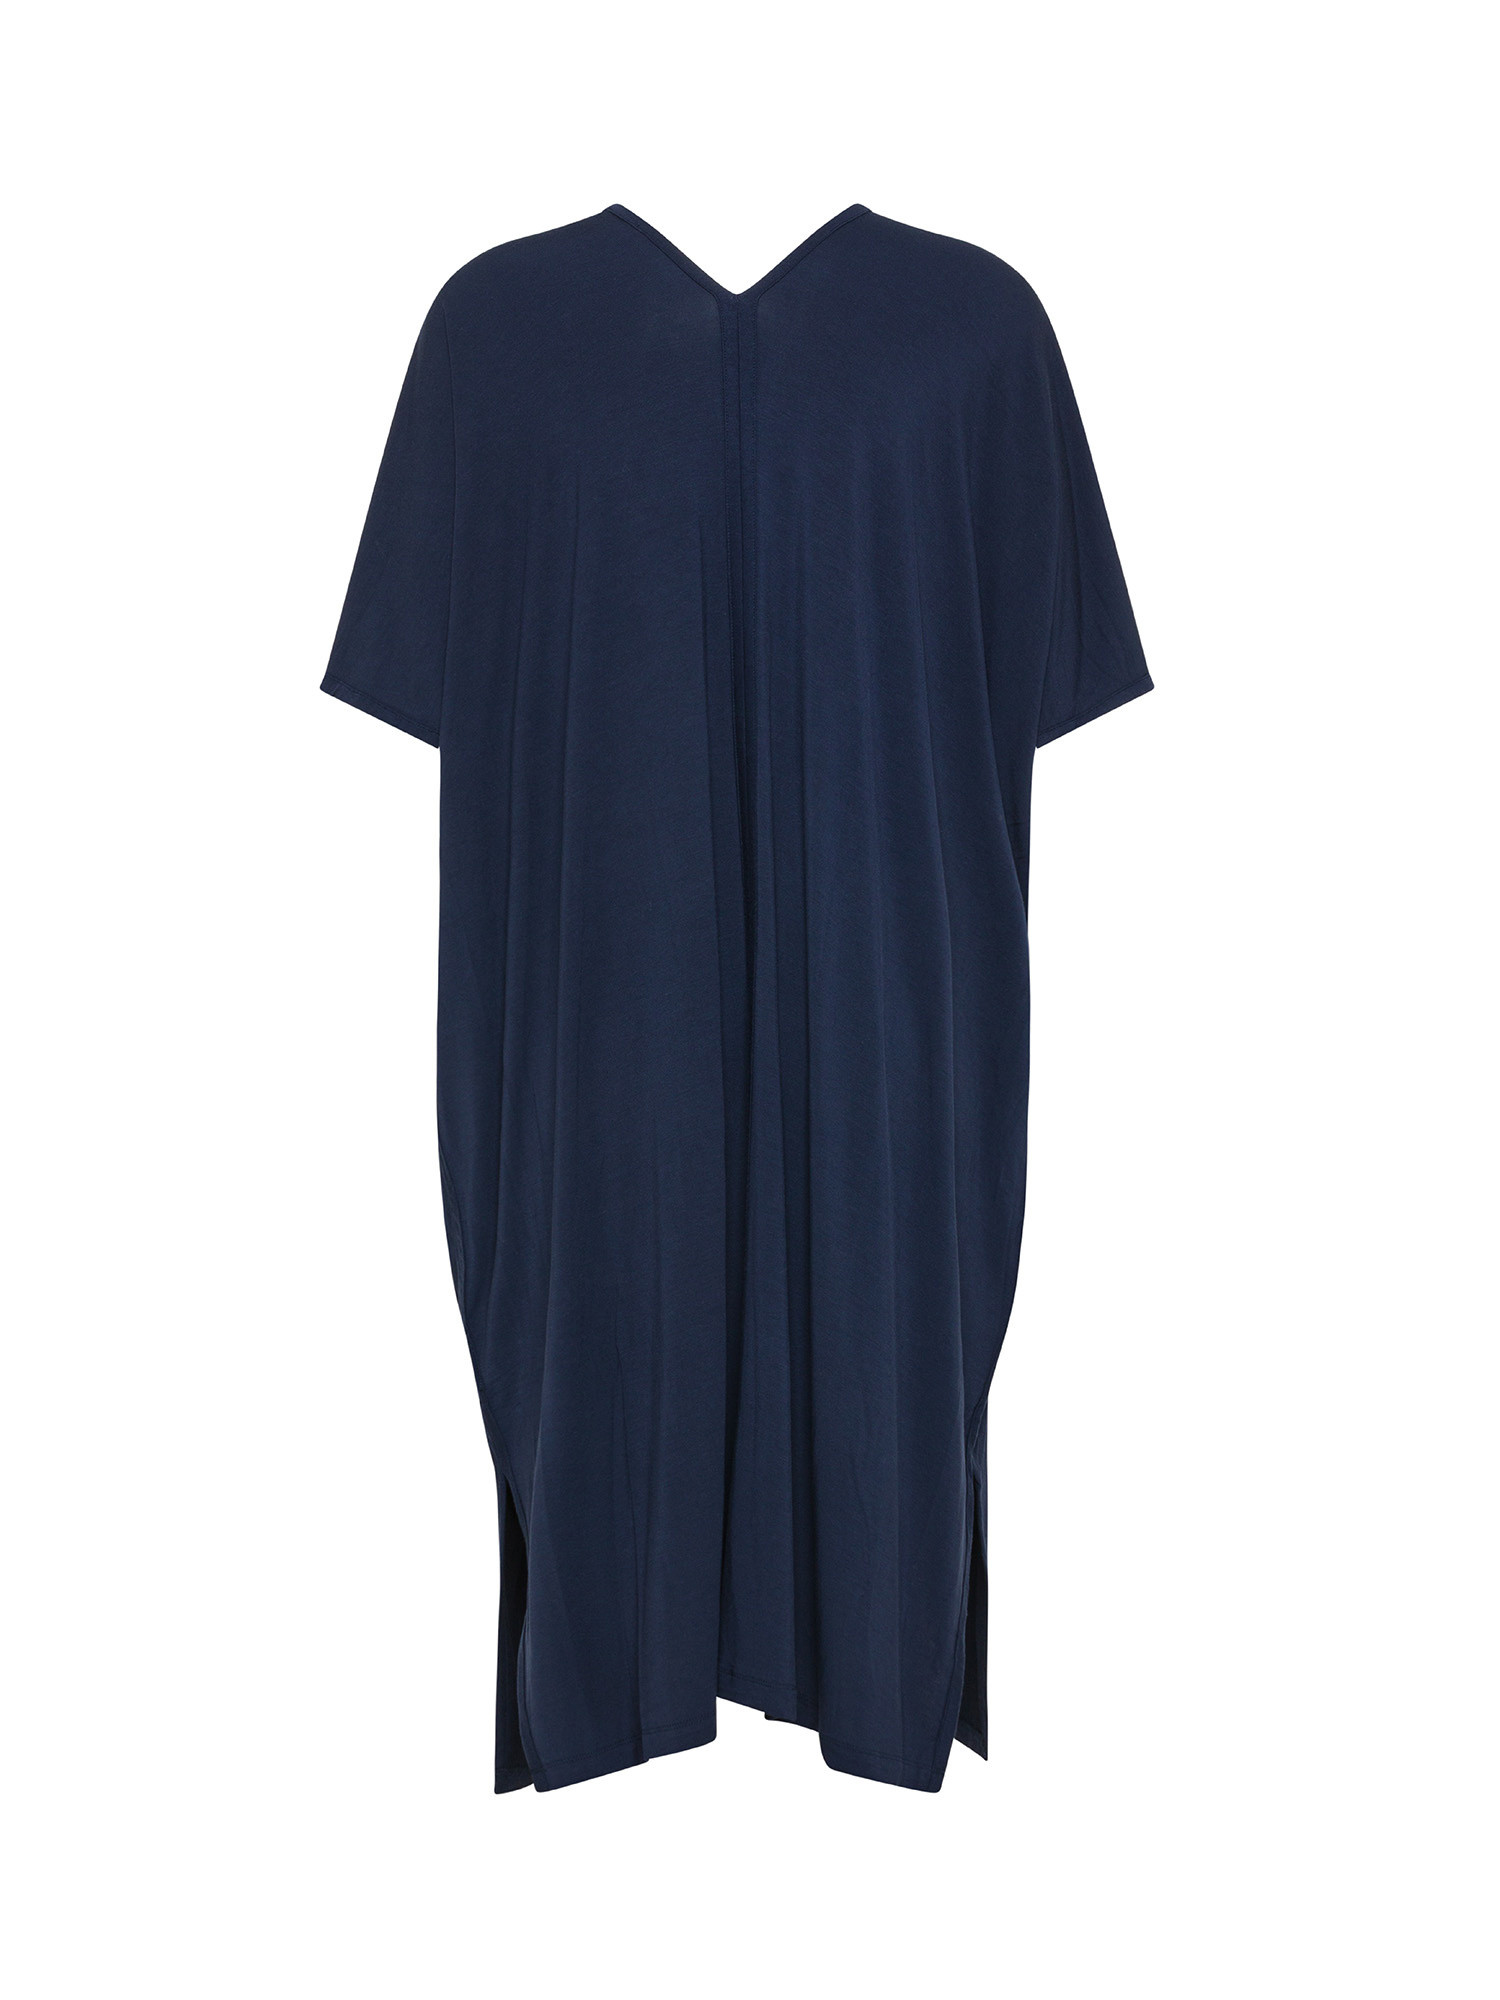 Bamboo viscose dress., Navy Blue, large image number 1